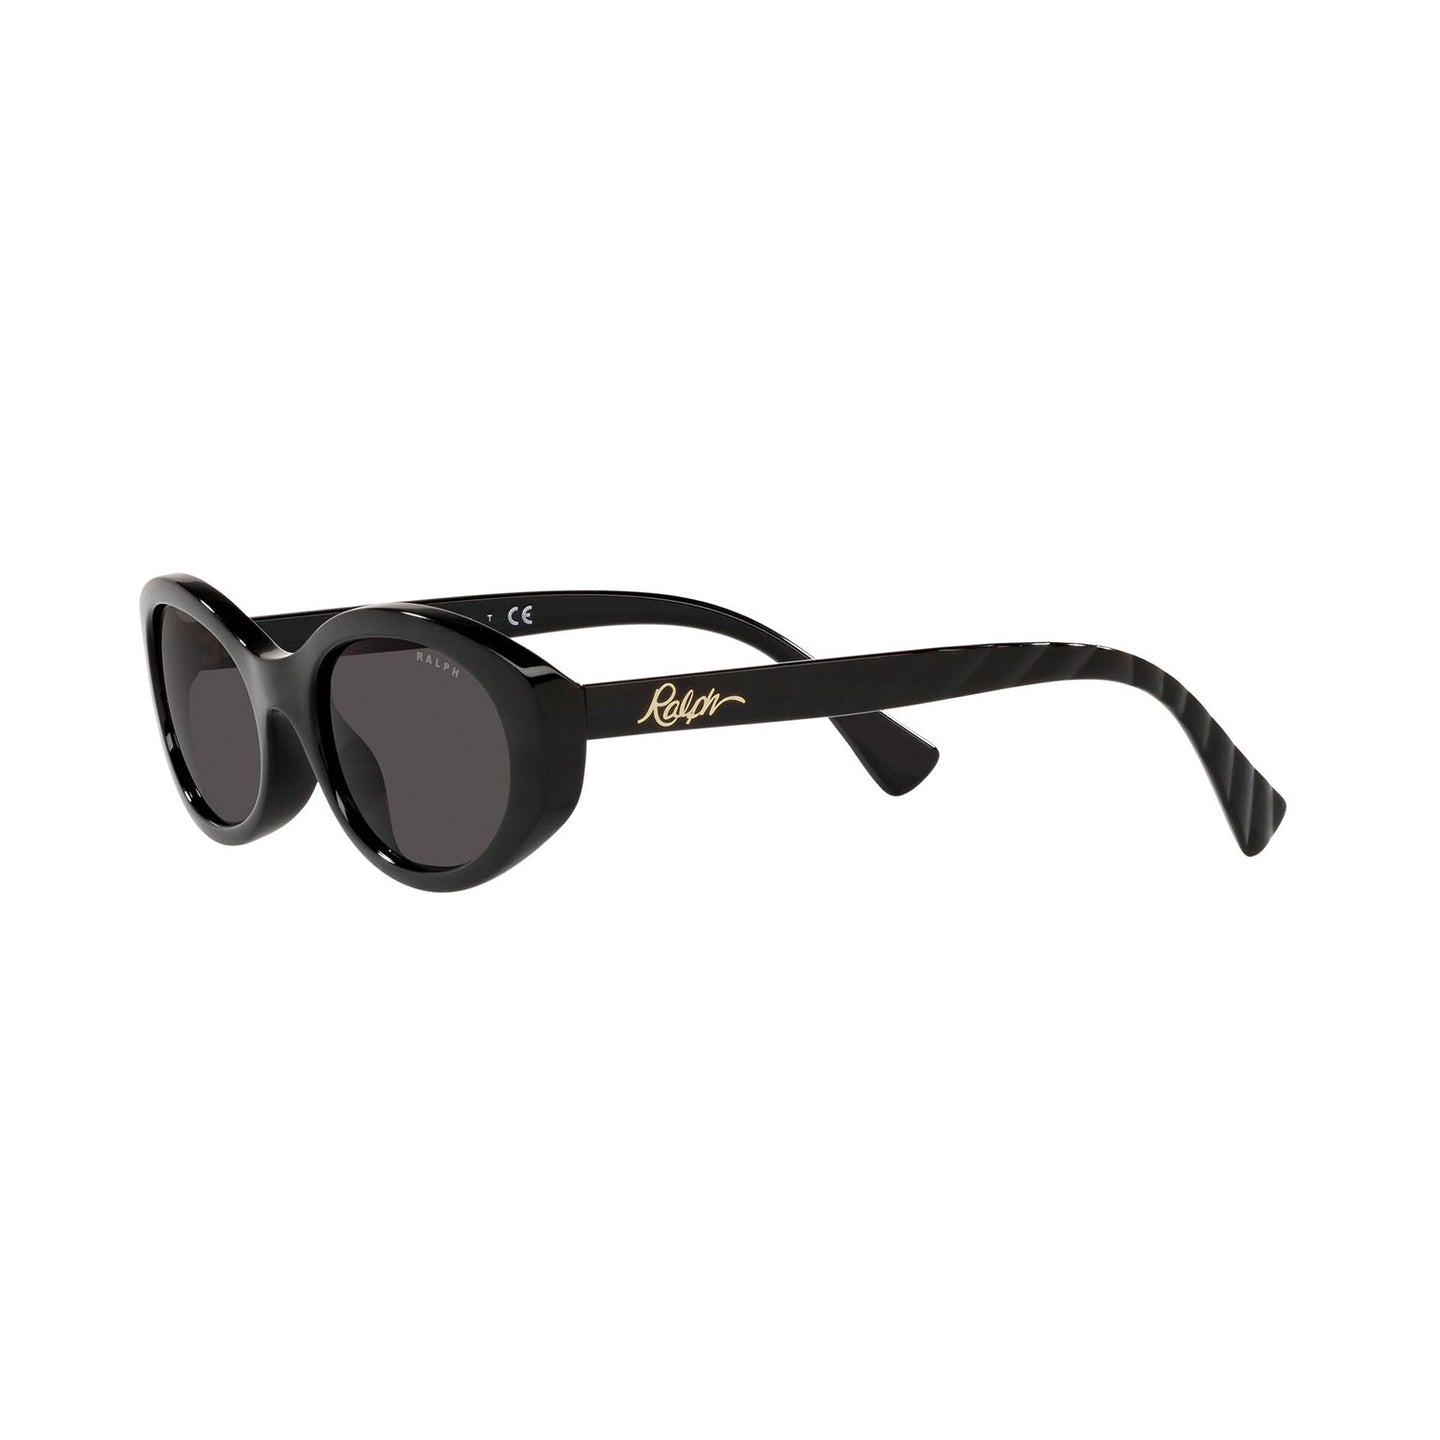 sunglasses ralph lauren model ra5278 color 500187 shiny black